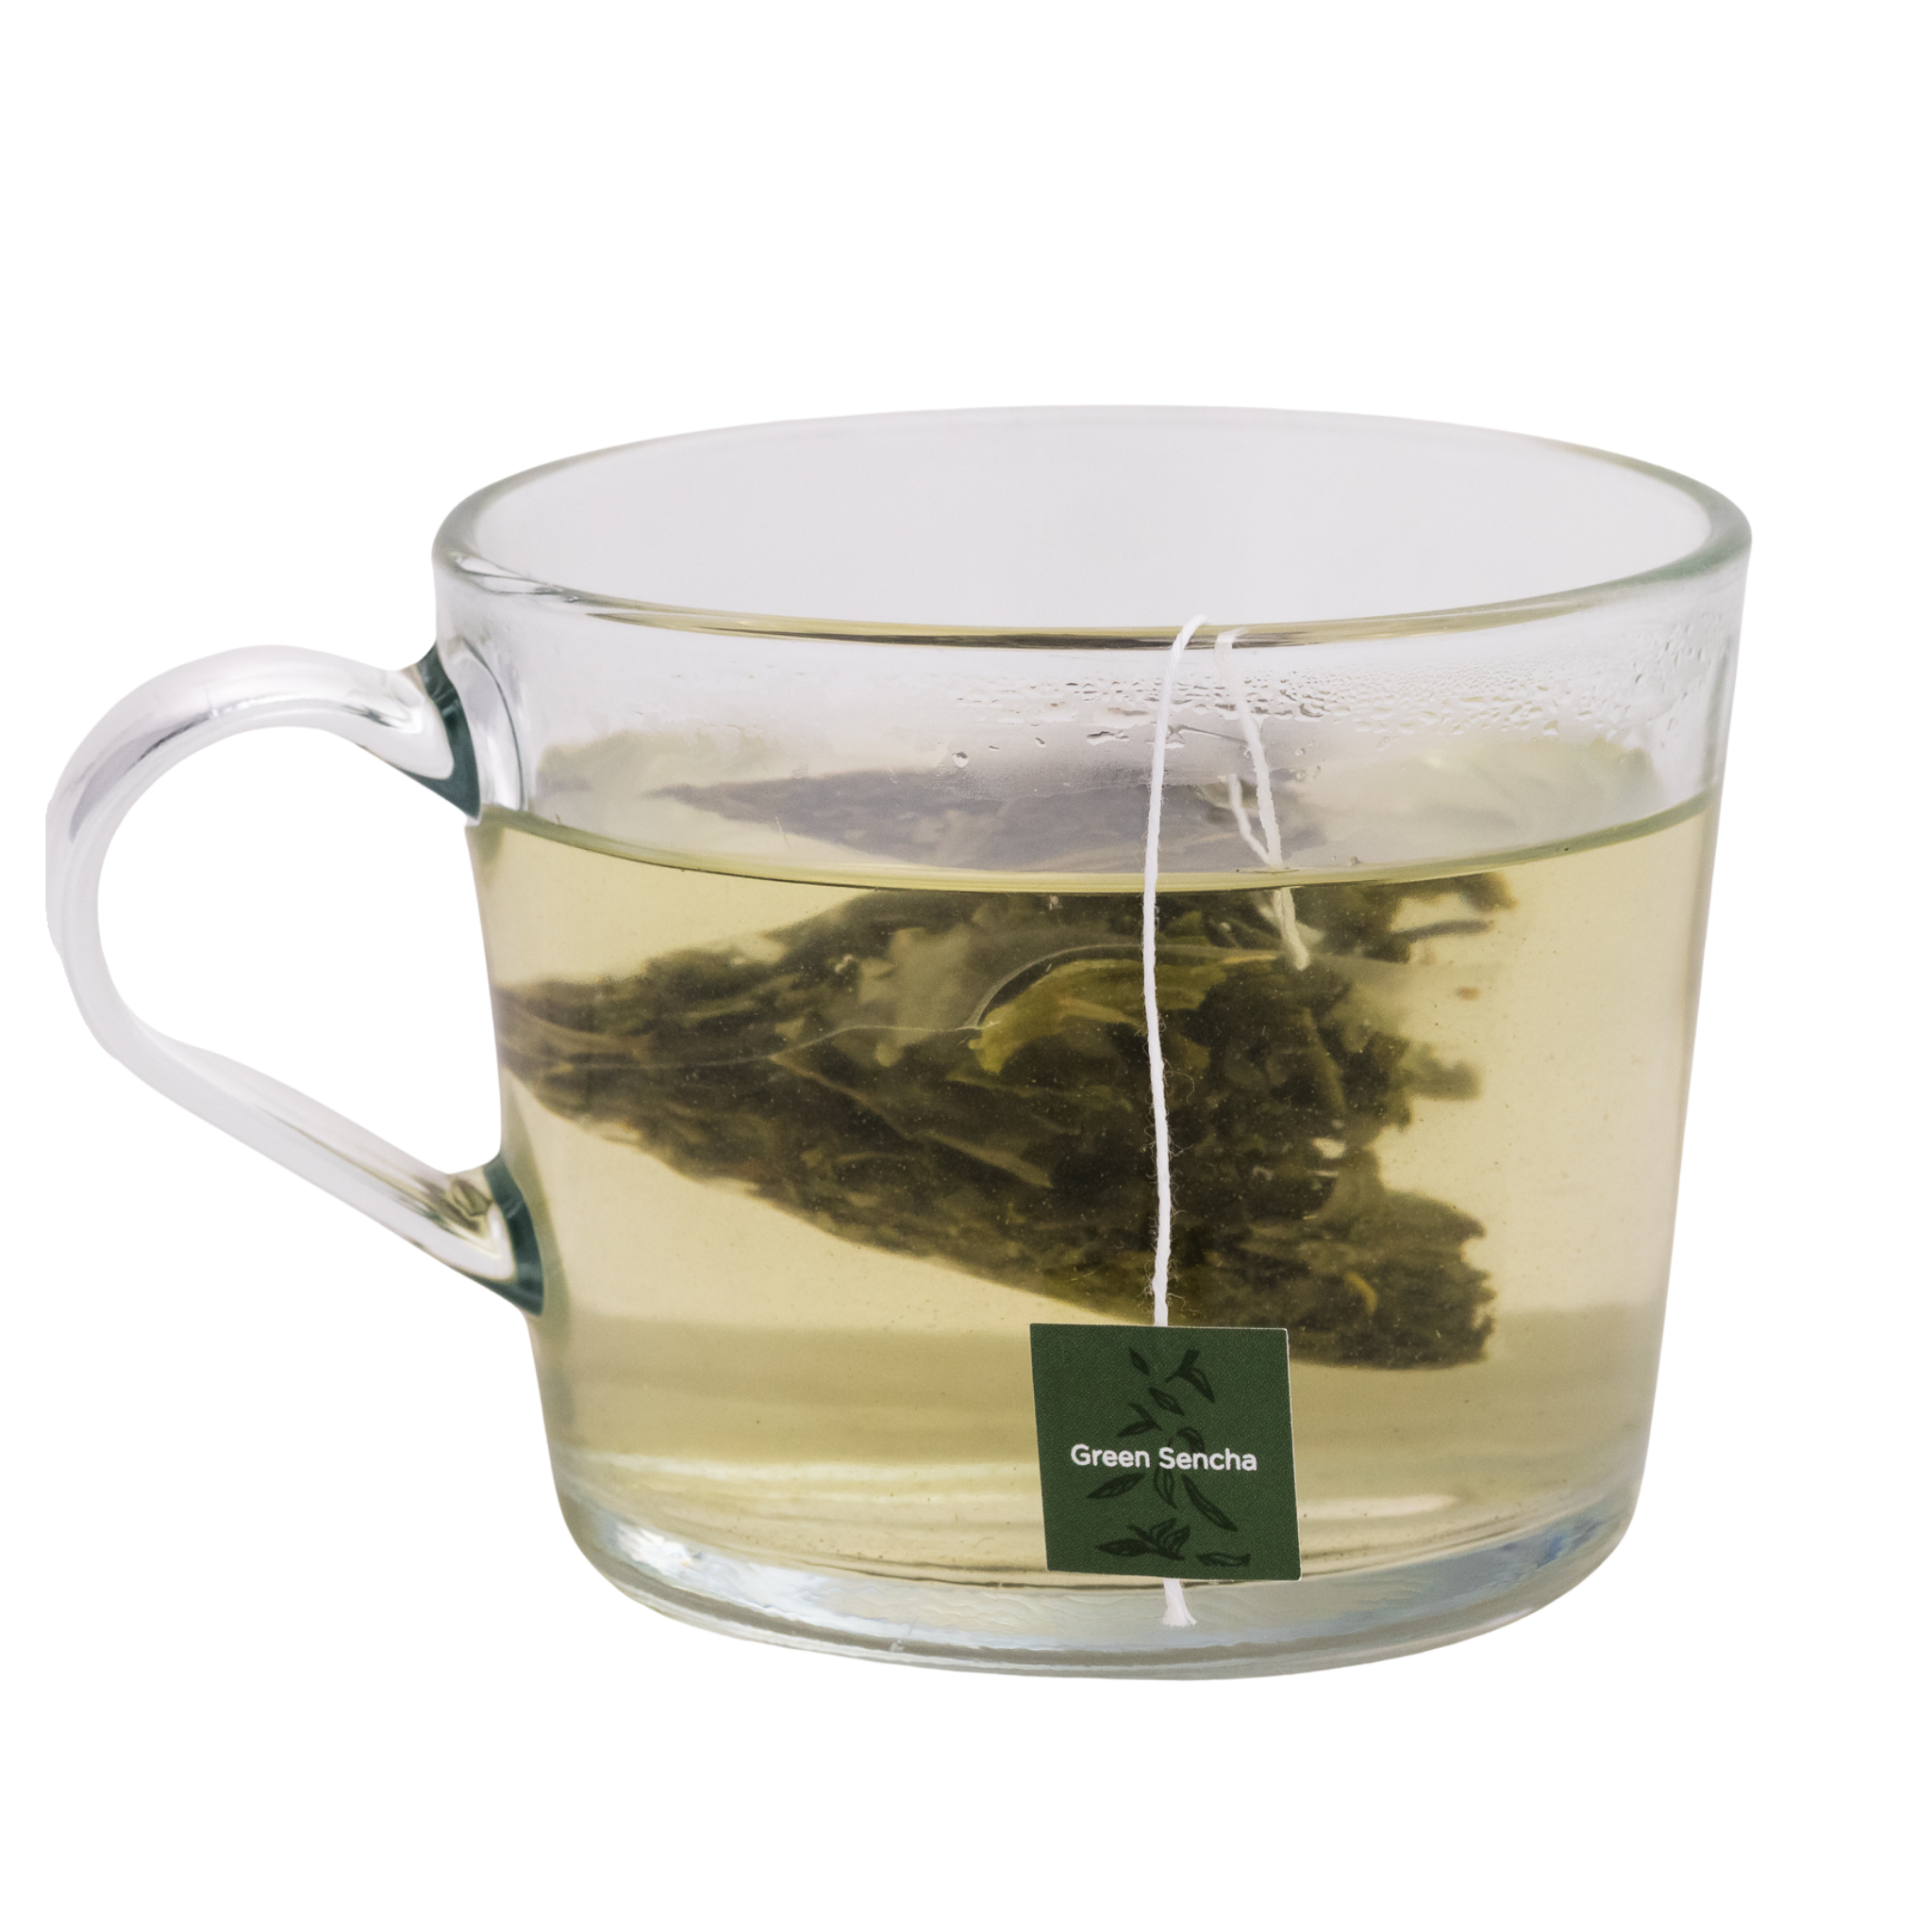 TEA MATE Loose Leaf Tea Bagger Infusing Tea In Clear Tea Cup Of TEA MATE Organic Supreme Green Tea Sencha Green Tea In Premium Biodegradable Tea Bags